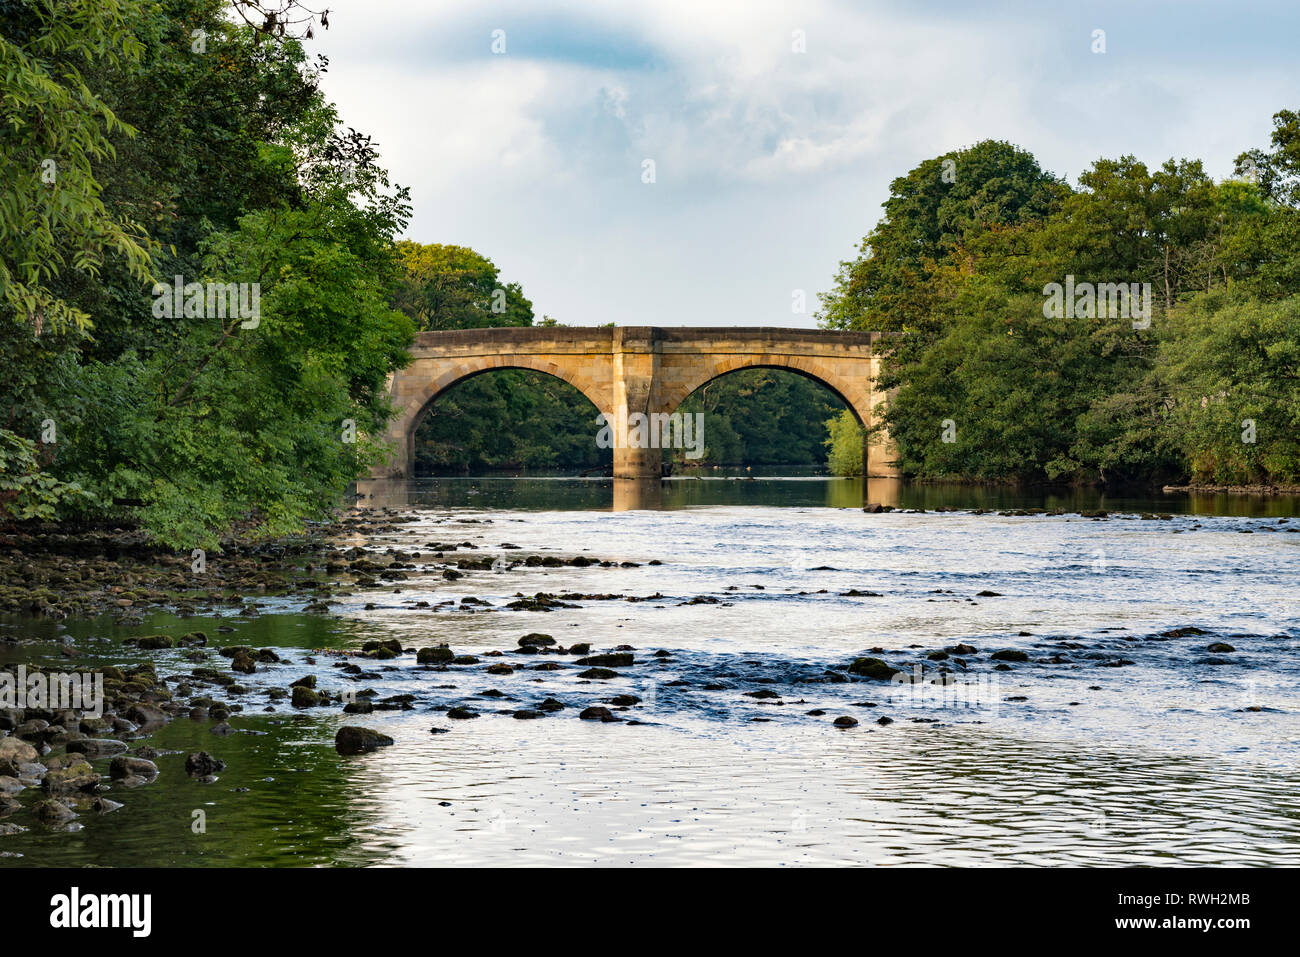 The bridge over the River Ure at Masham Stock Photo